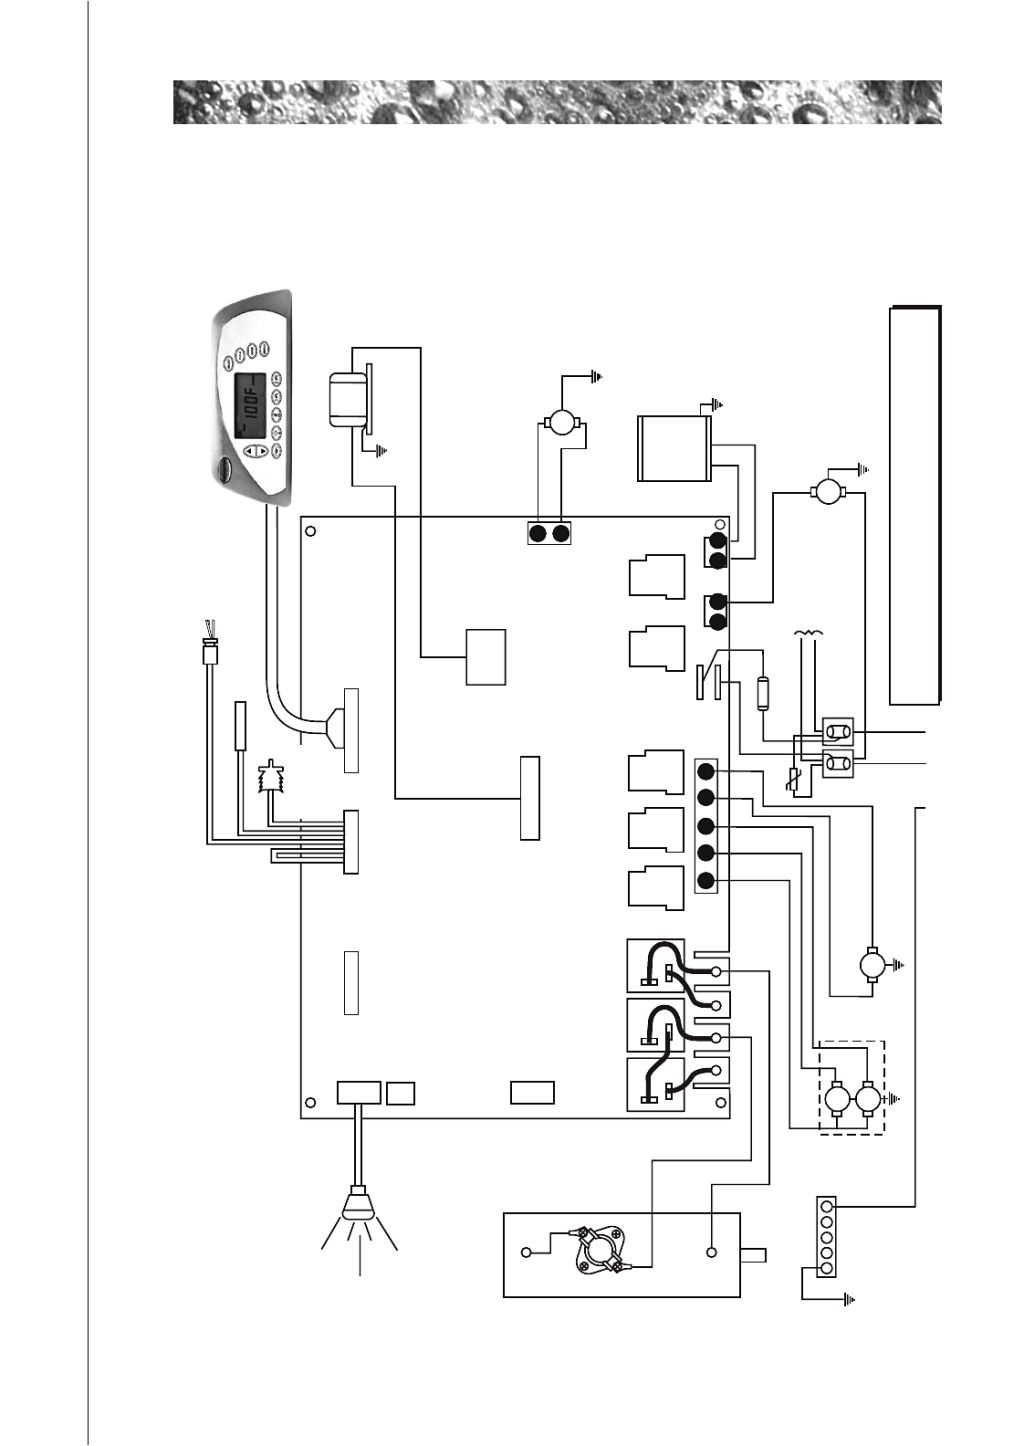 spa wiring diagram for 110 wiring diagram technicmarquis spa wiring schematic wiring diagrams second